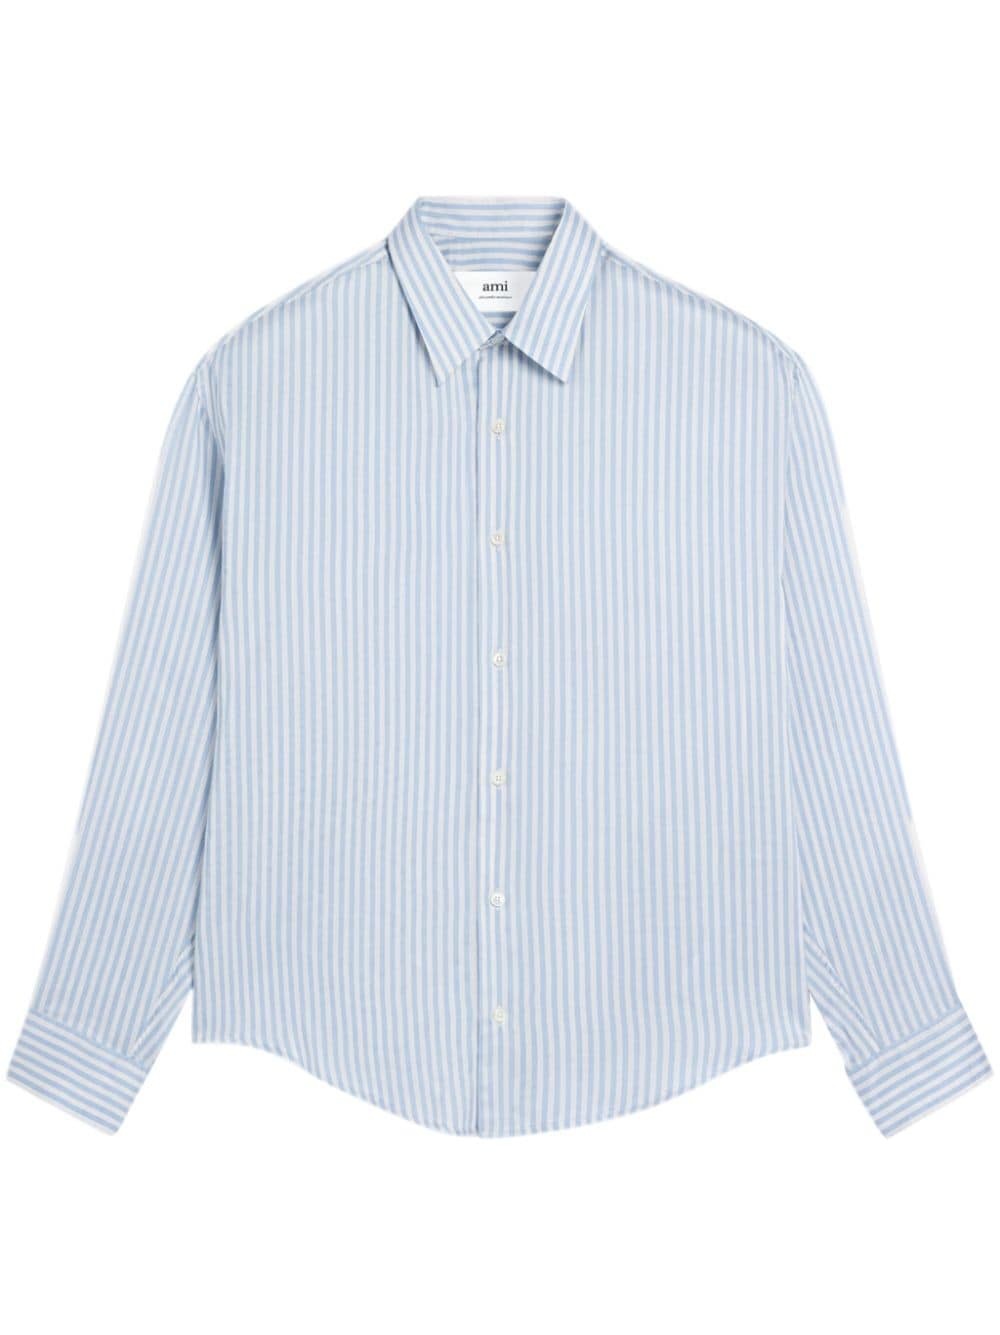 long-sleeve striped shirt - 1